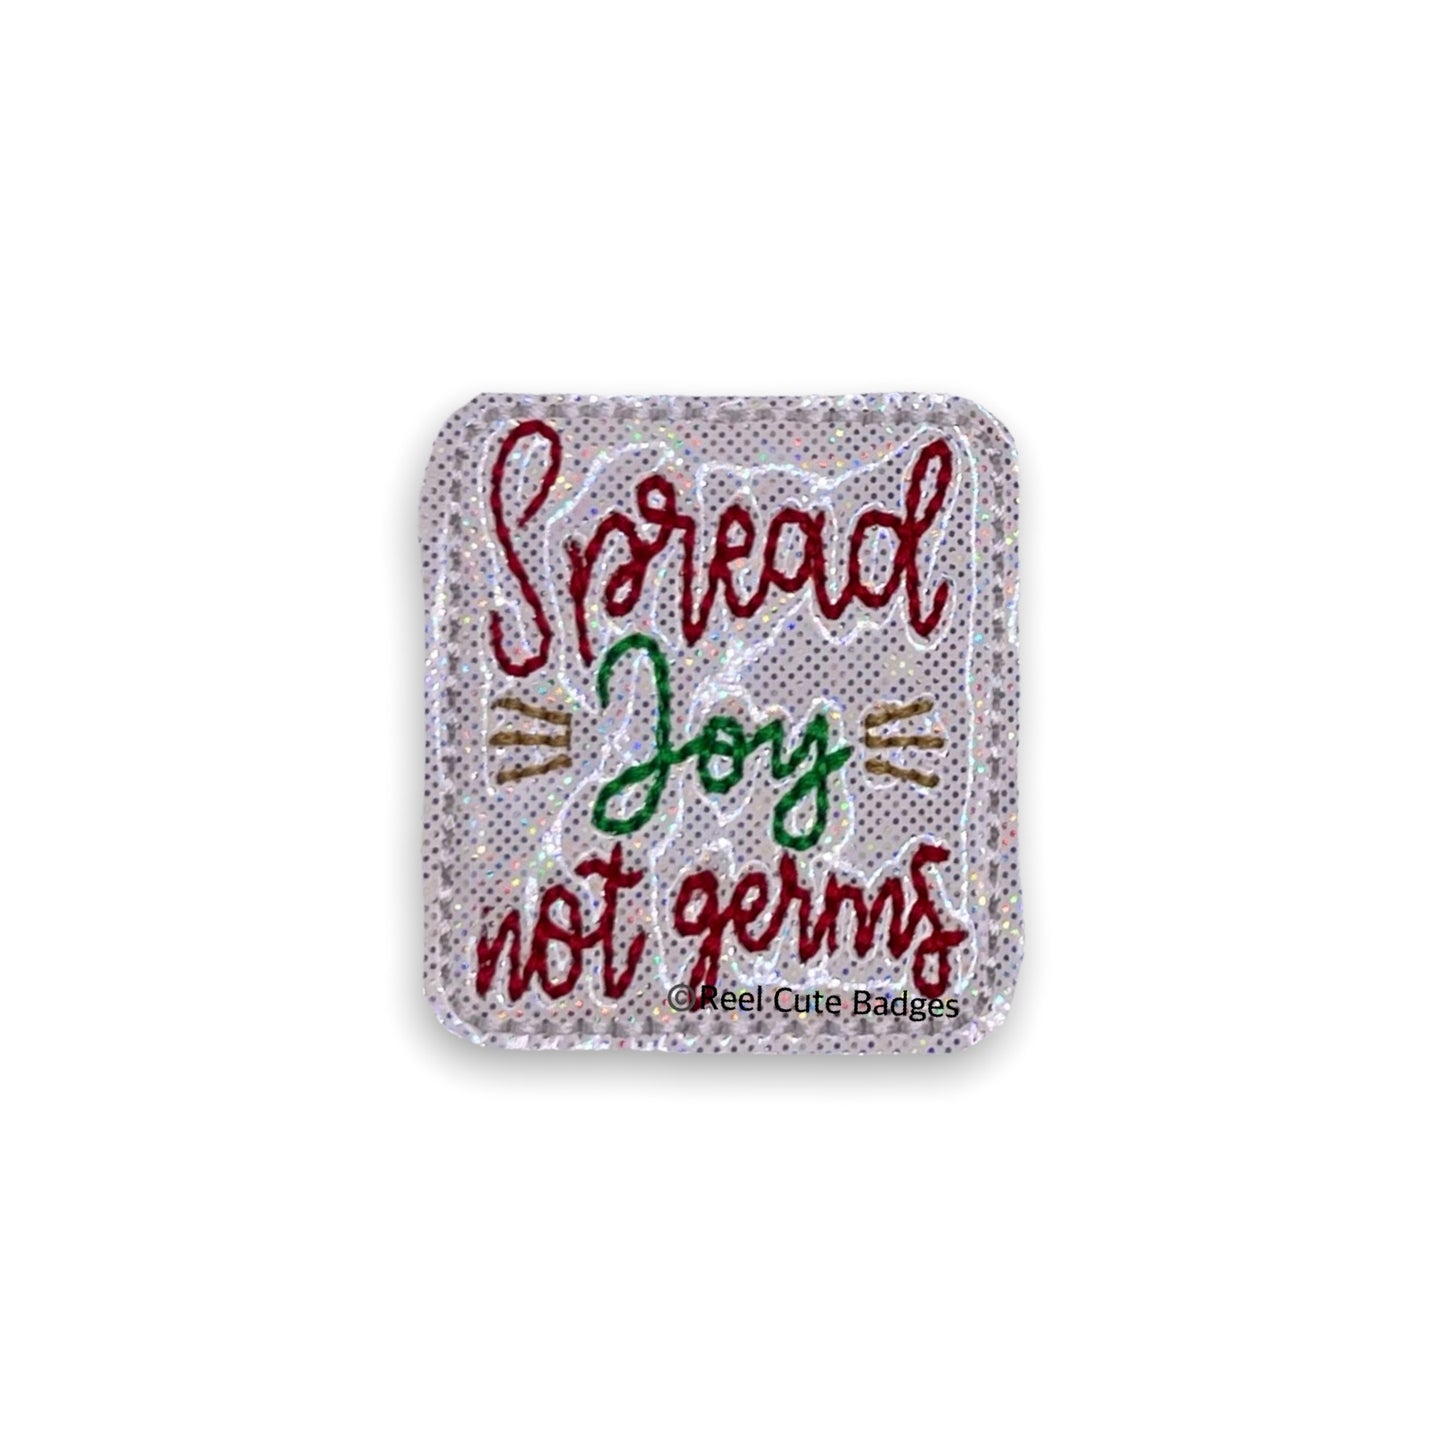 Spread Joy, Not Germs